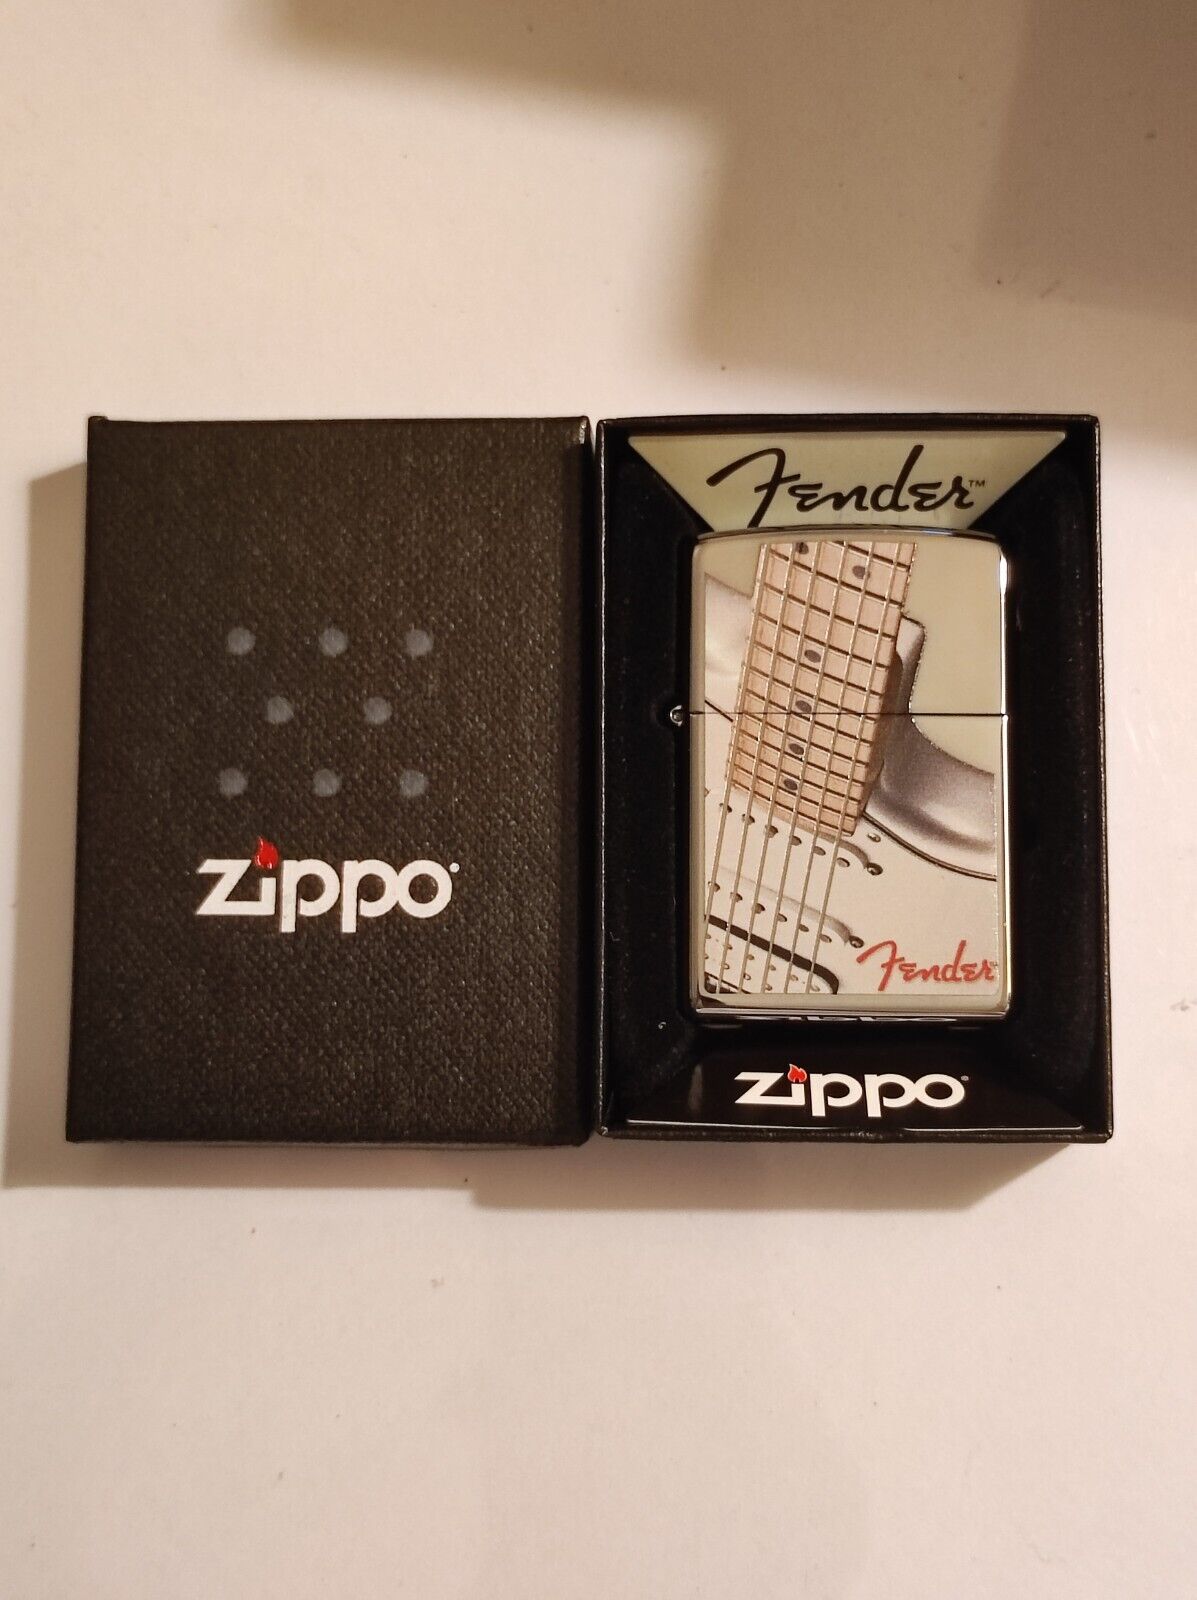 Zippo 28845 Fender Guitar Lighter Case - No Inside Guts Insert